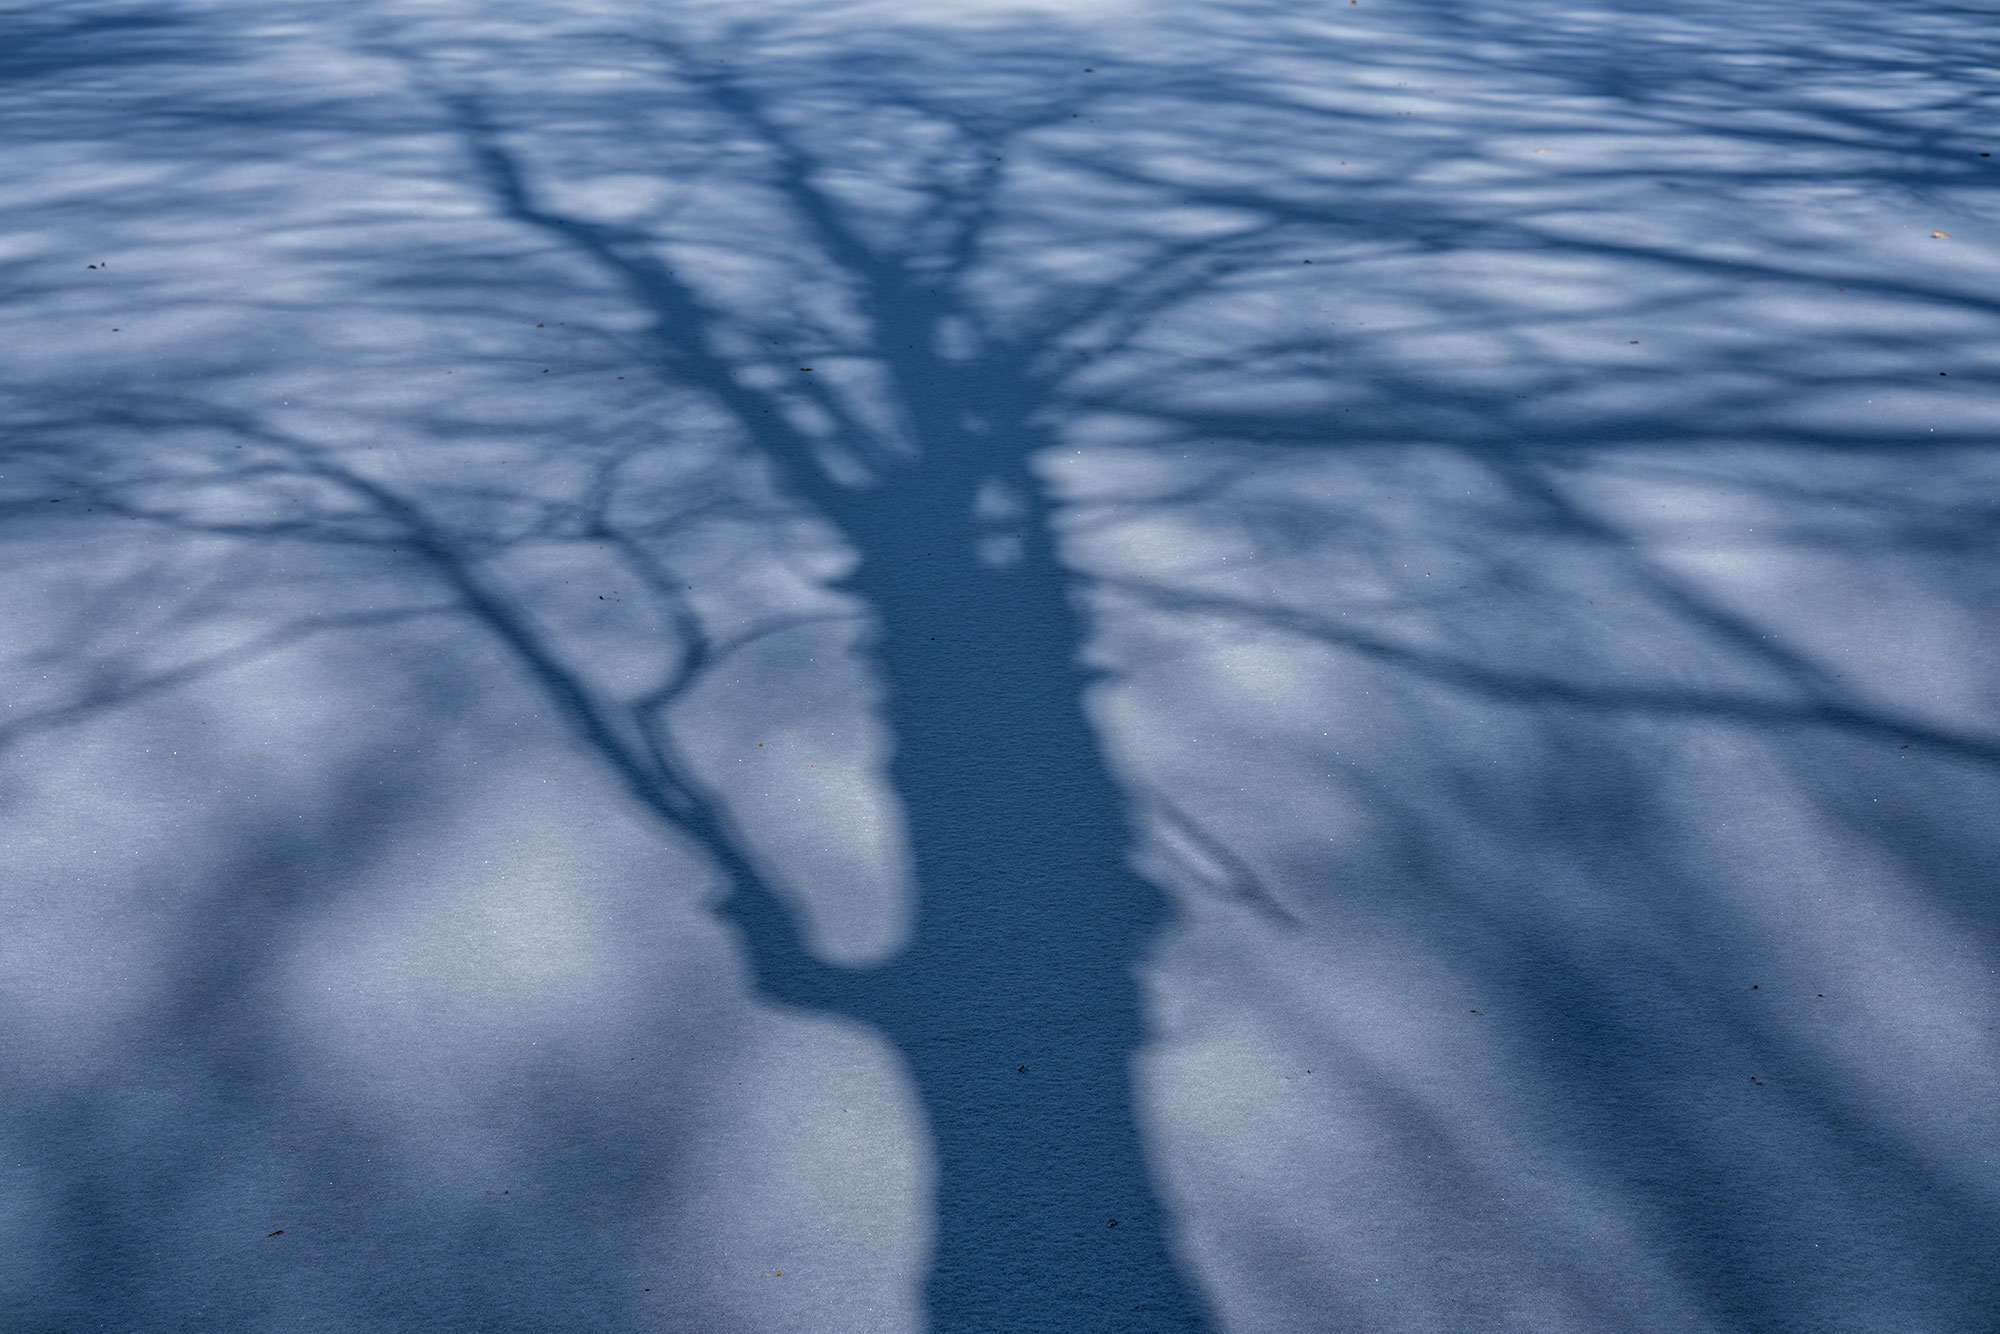 Winter Shadow